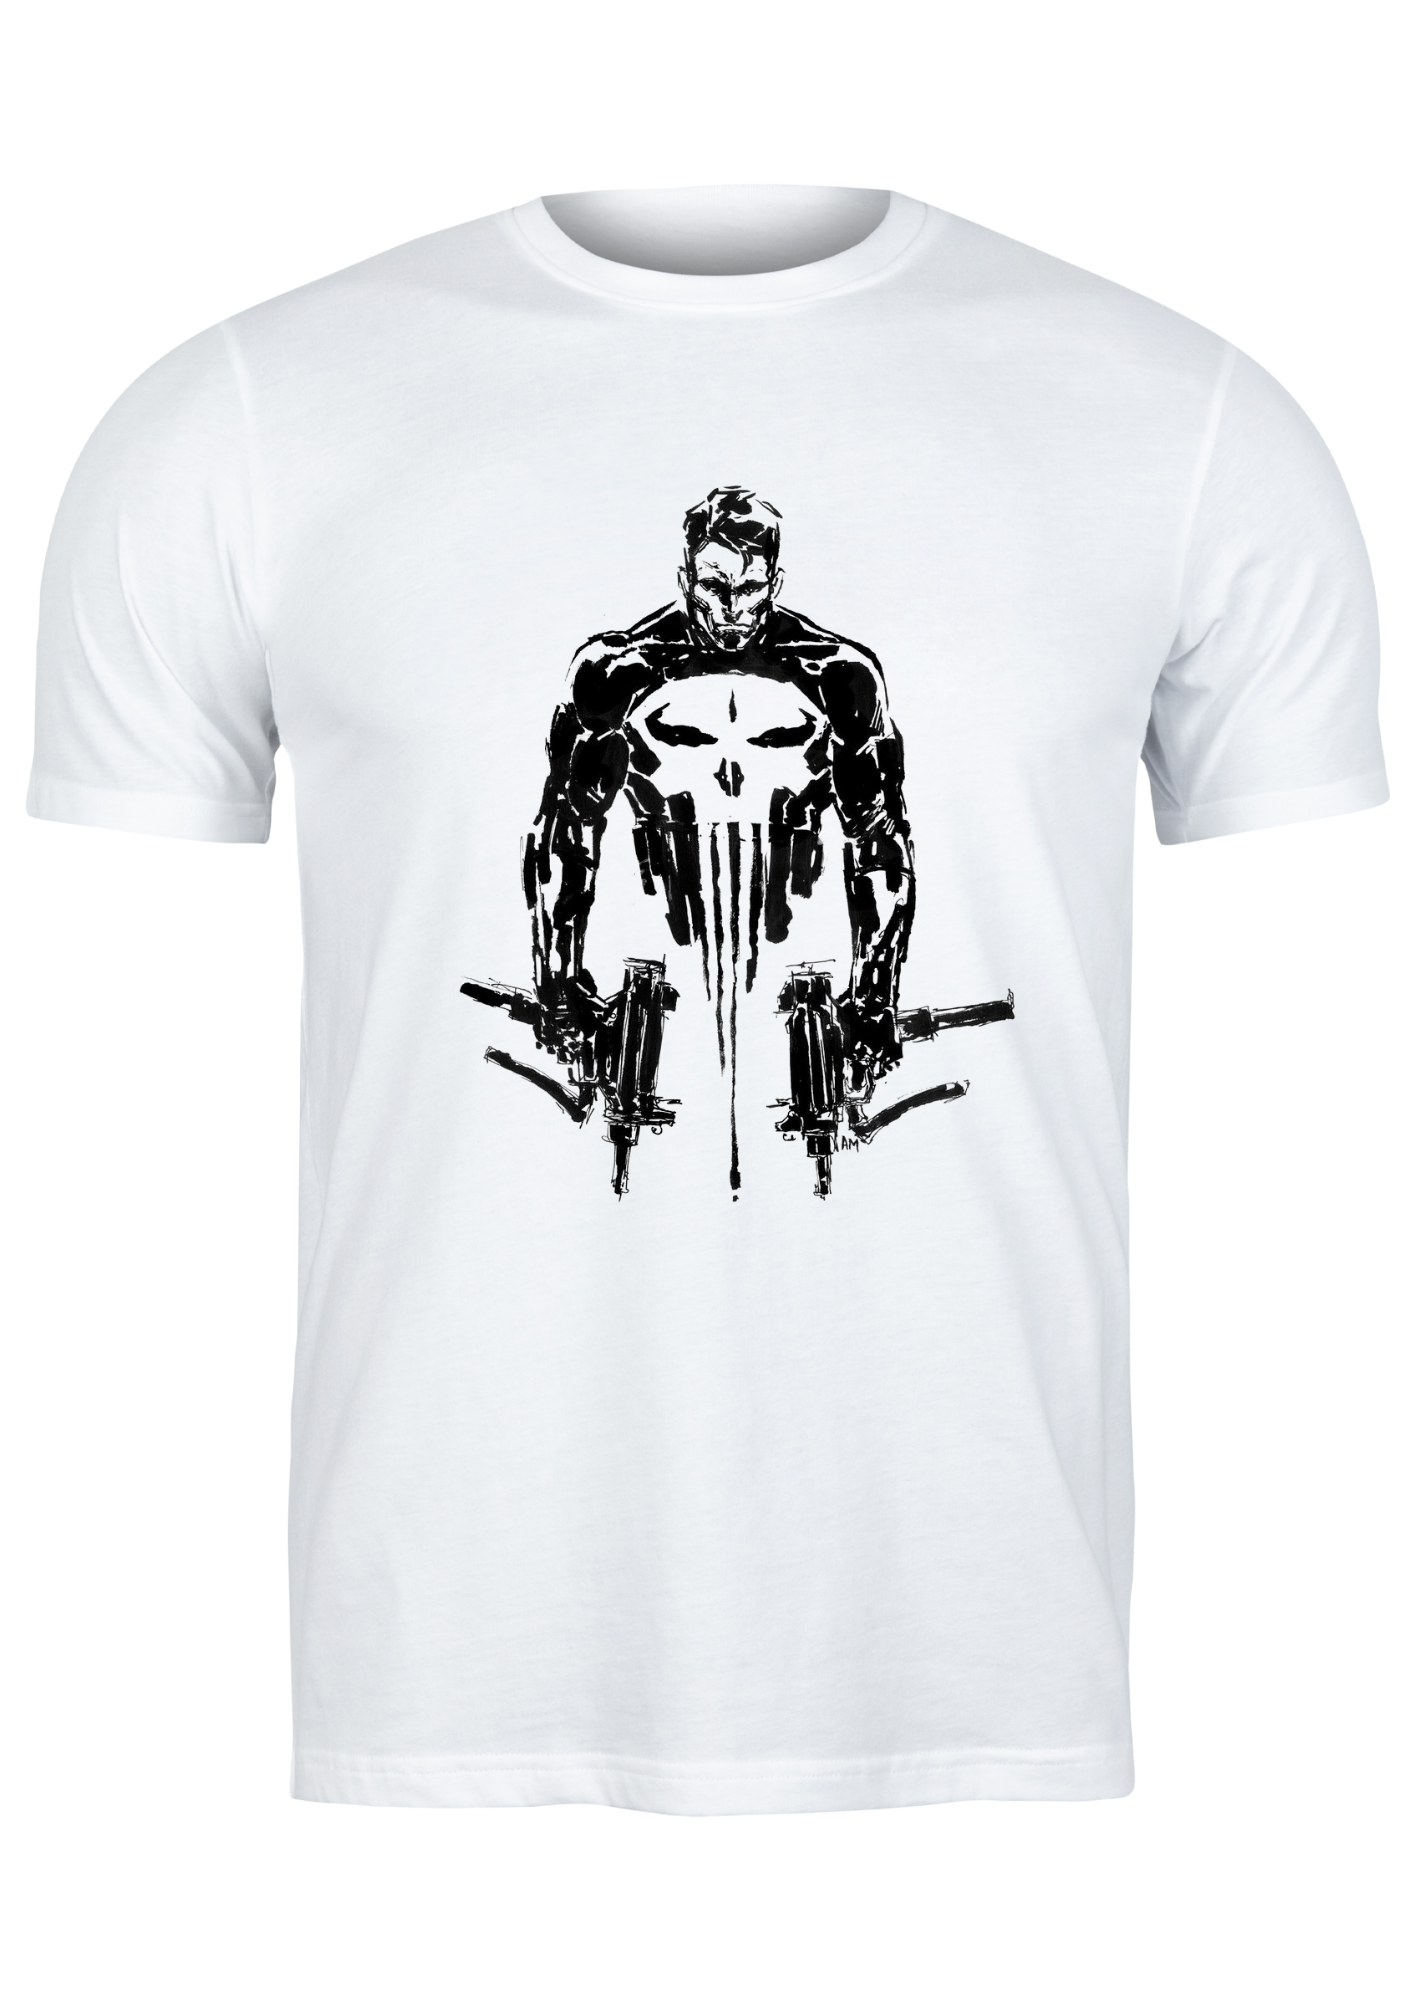 Unisex T Shirt Printed The Punisher